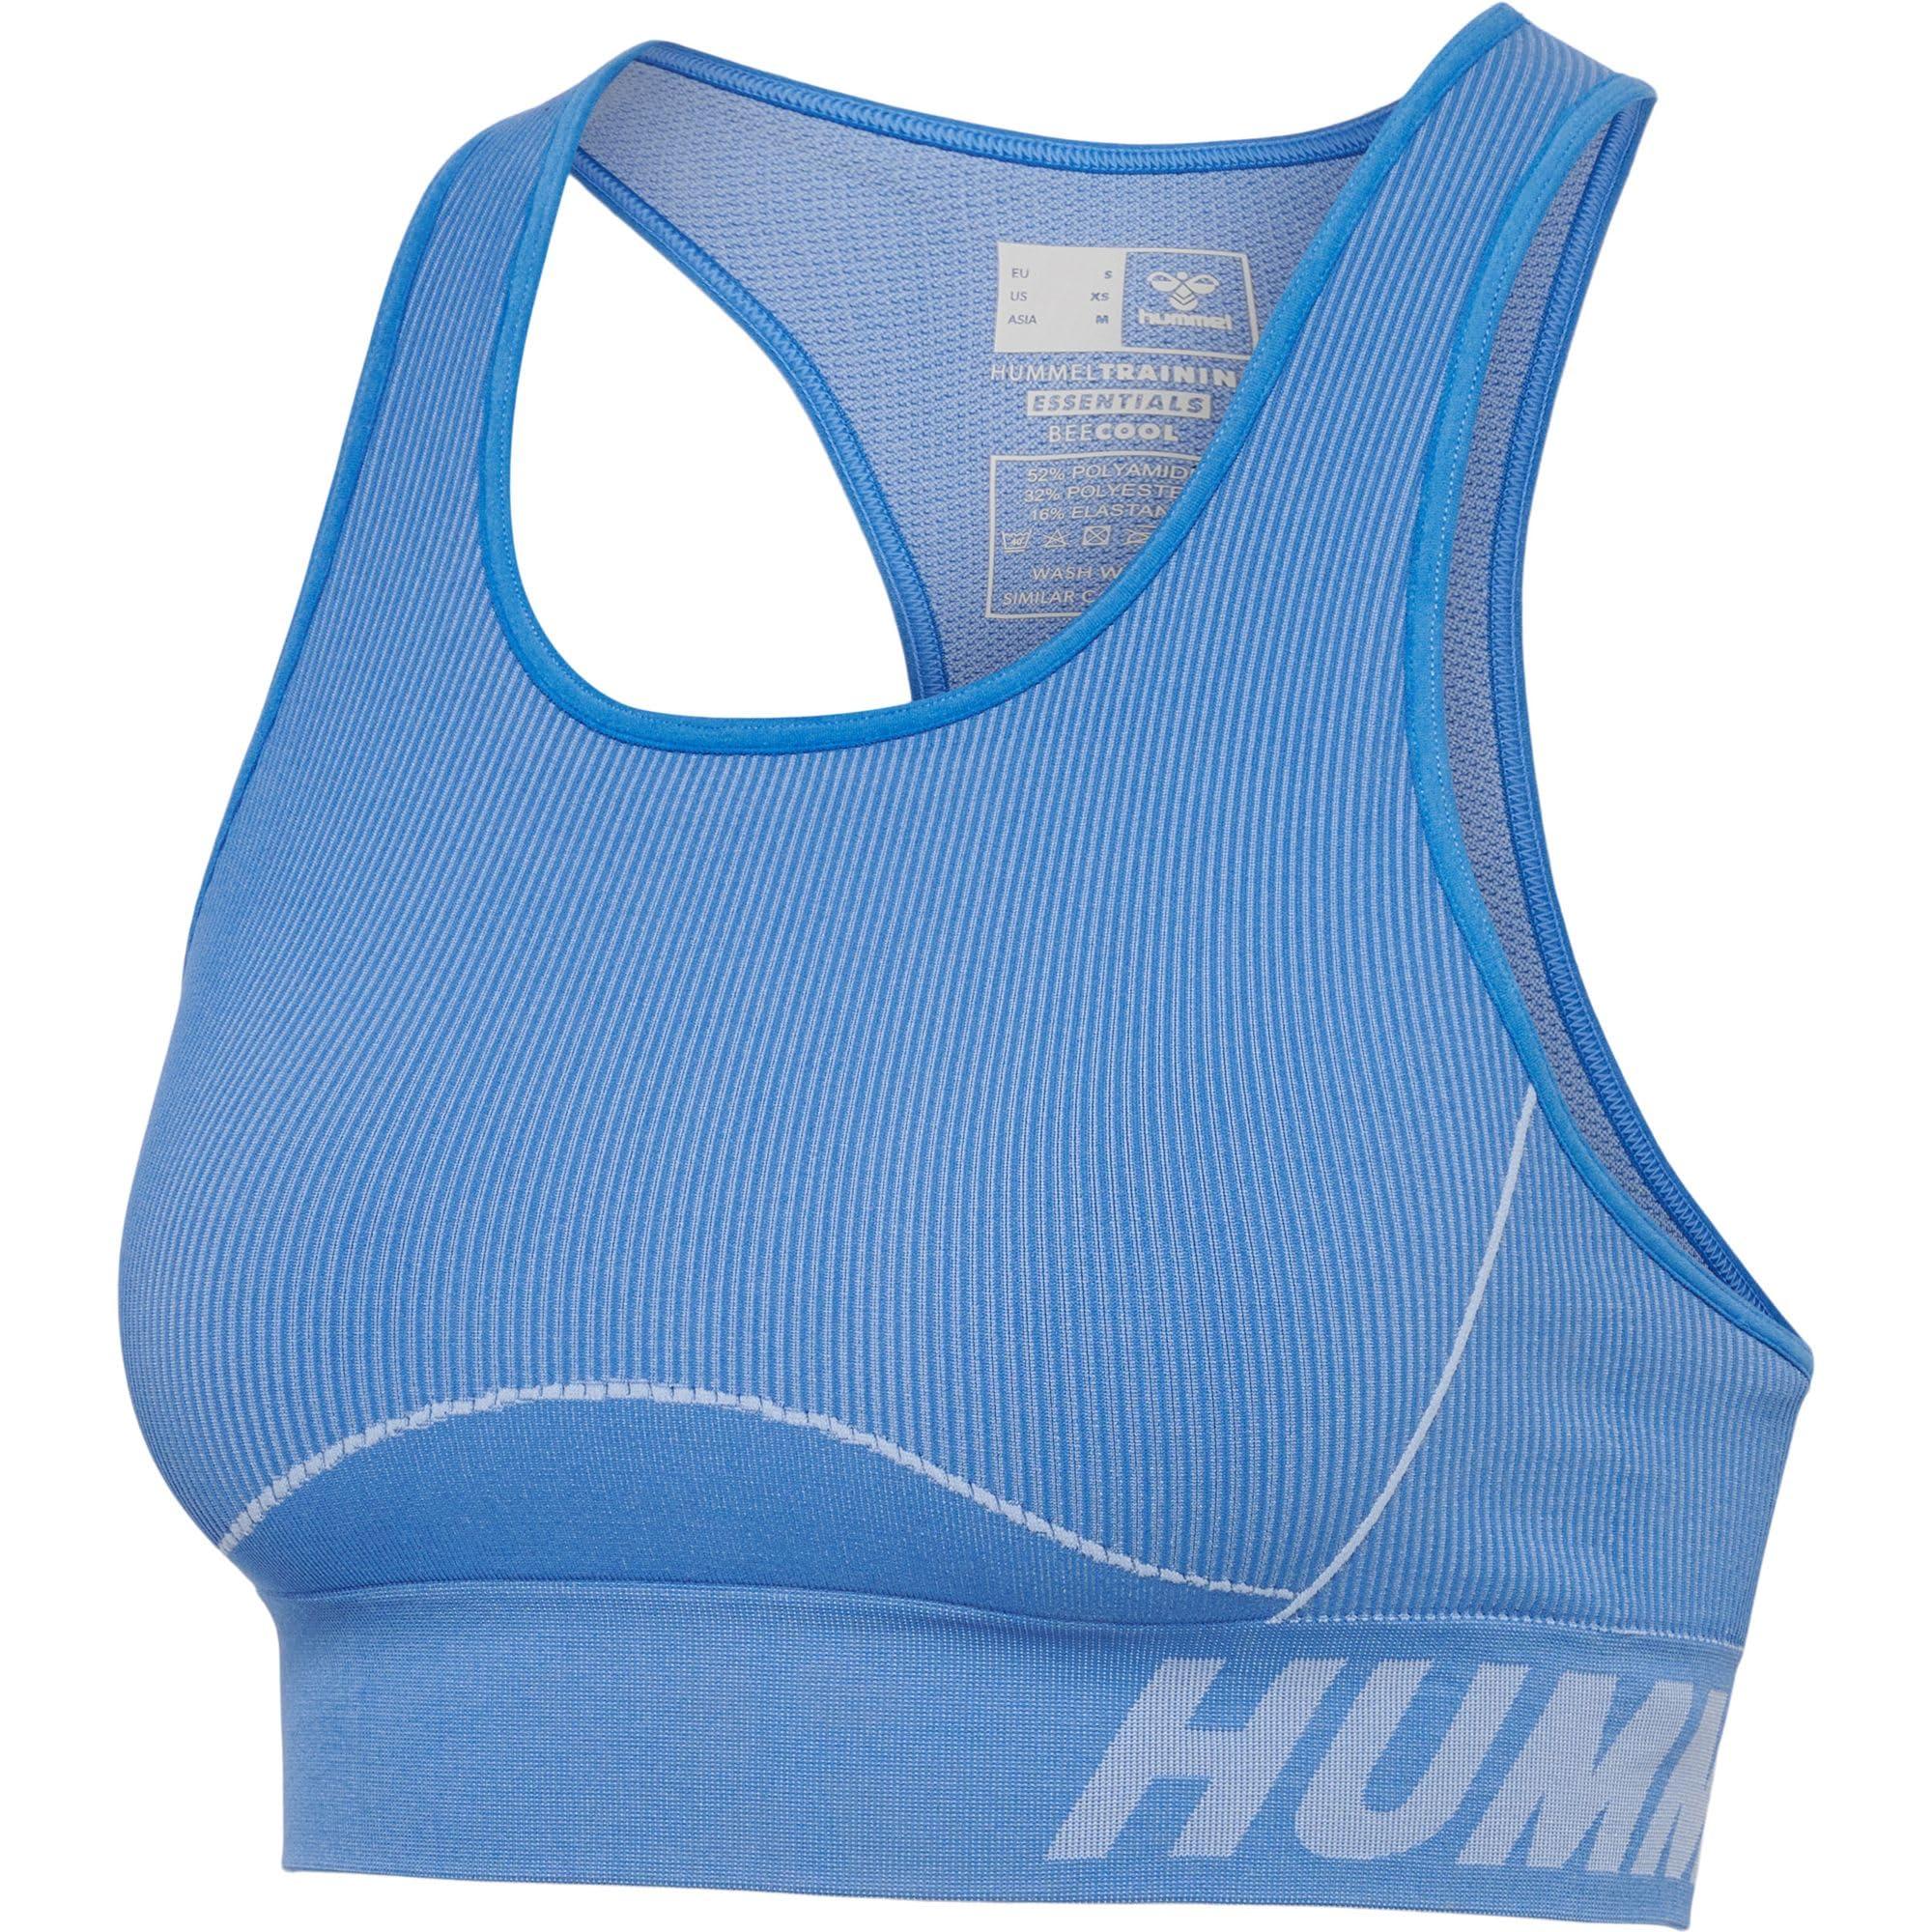 Hummel – tif – nahtloser sport-bh in Blau